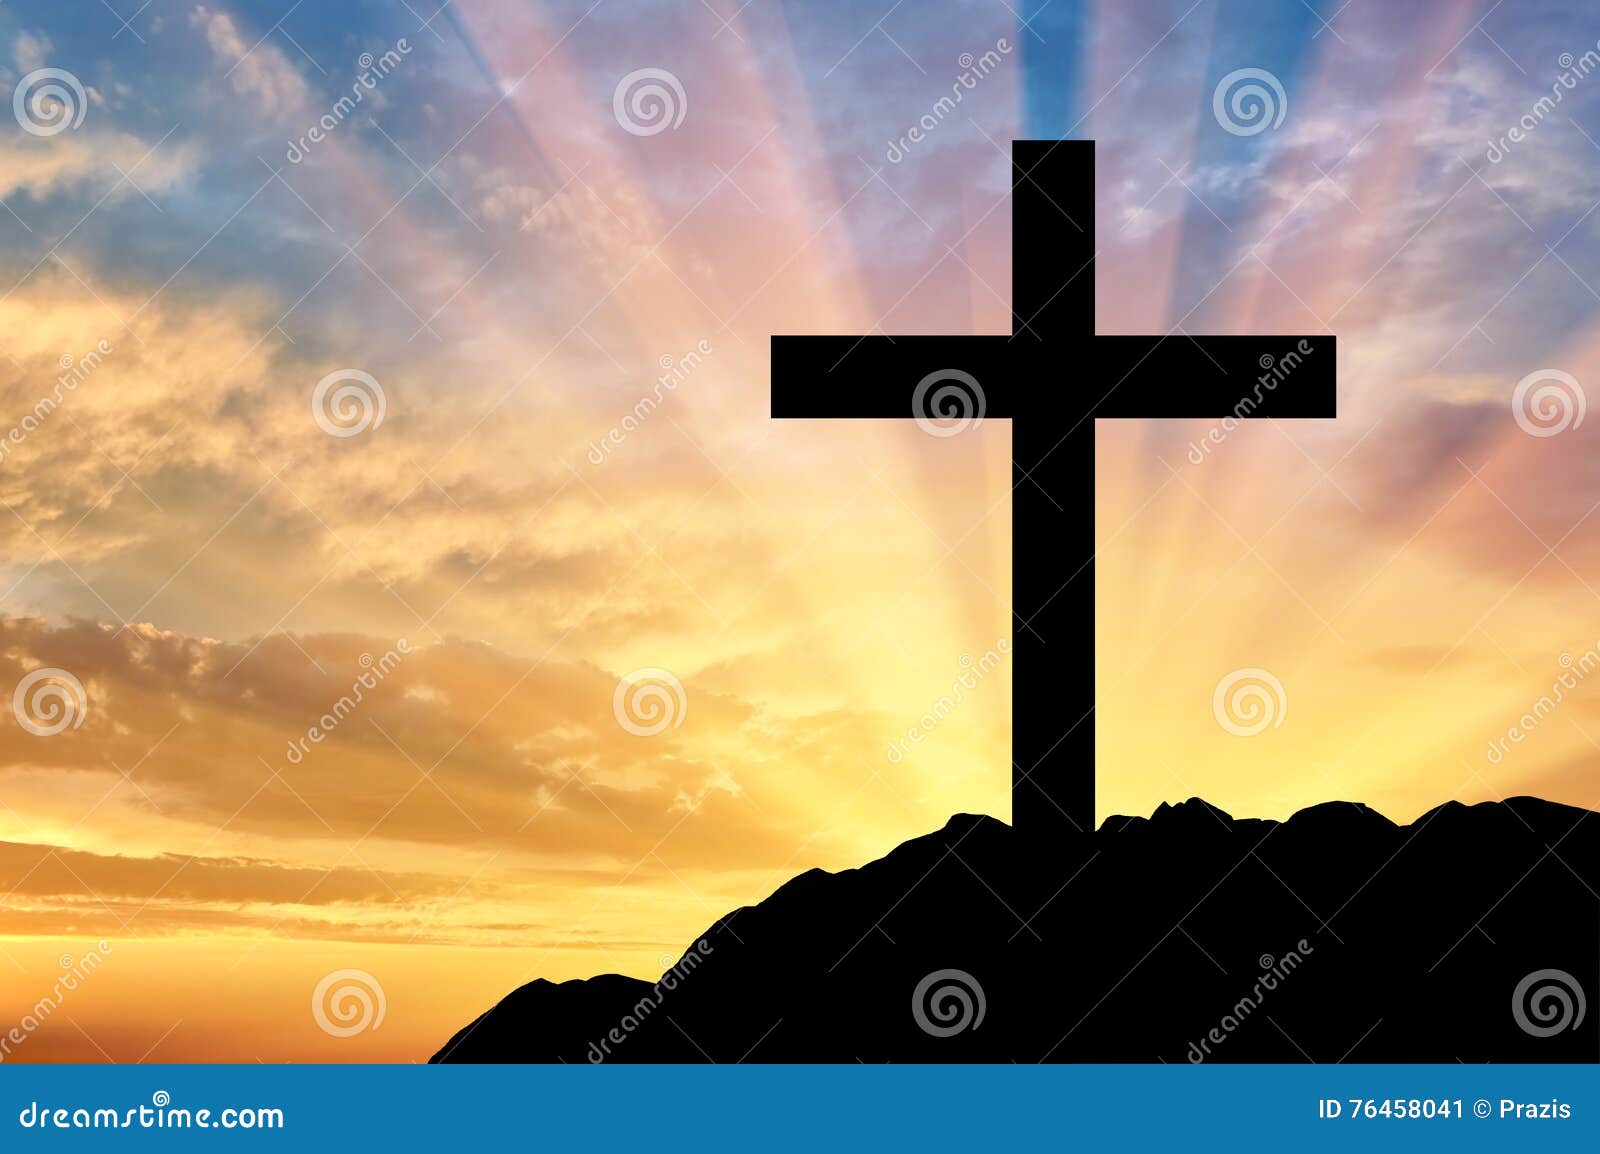 religion christianity. cross silhouette